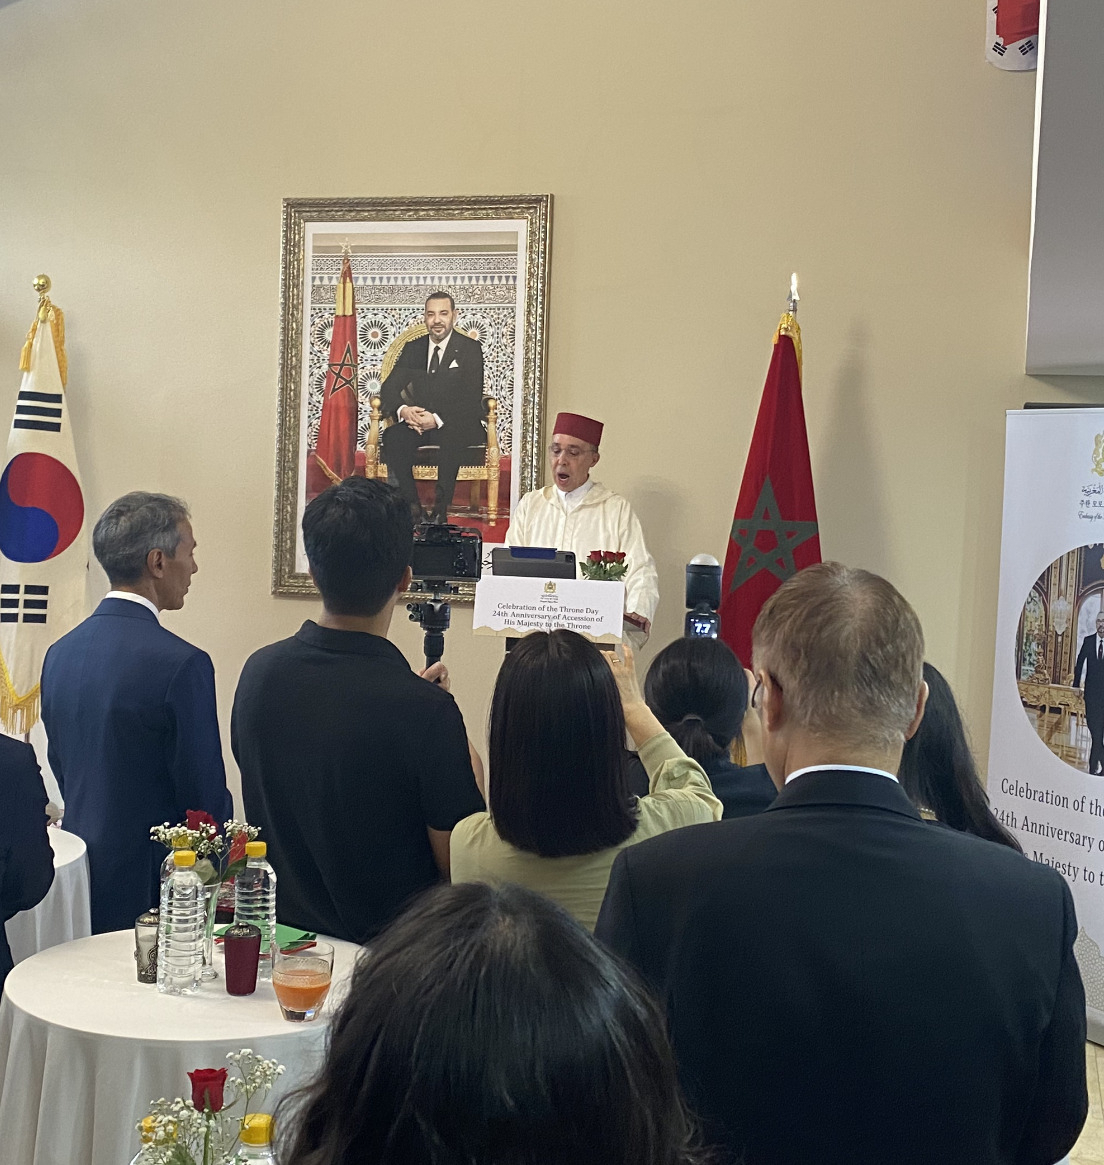 Moroccan Ambassador to Korea Chafik Rachadi delivers remarks in celebration of Throne Day at his residence in Yongsan-gu, Seoul. (Sanjay Kumar/The Korea Herald)